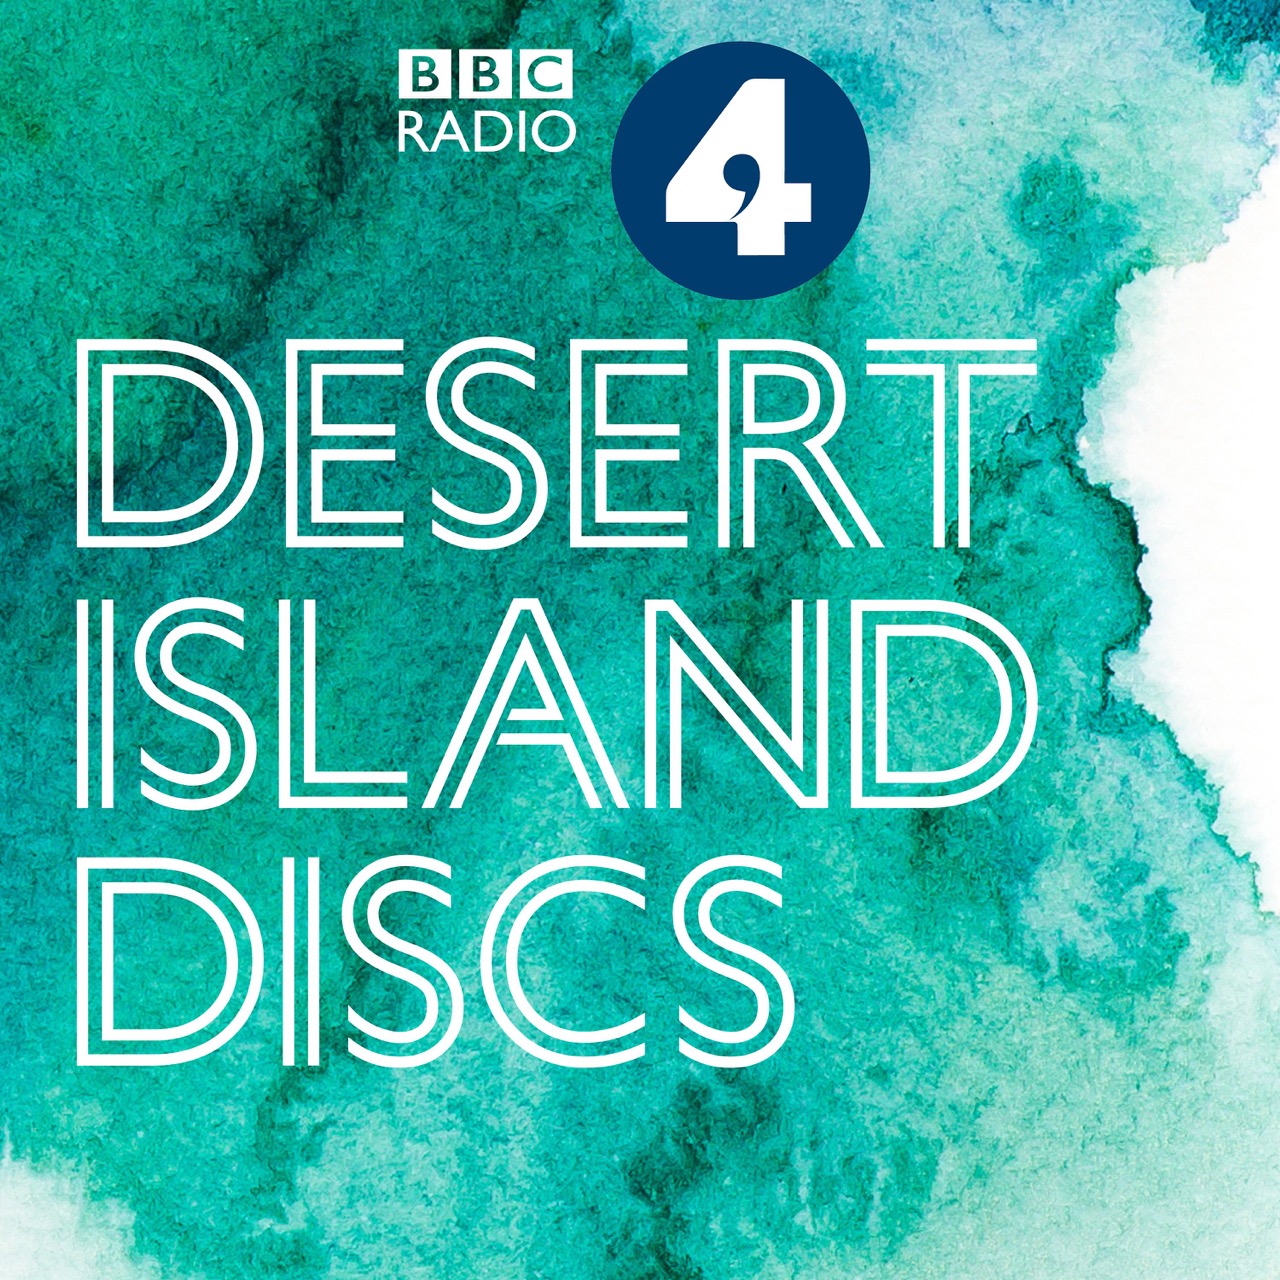 Desert island discs today